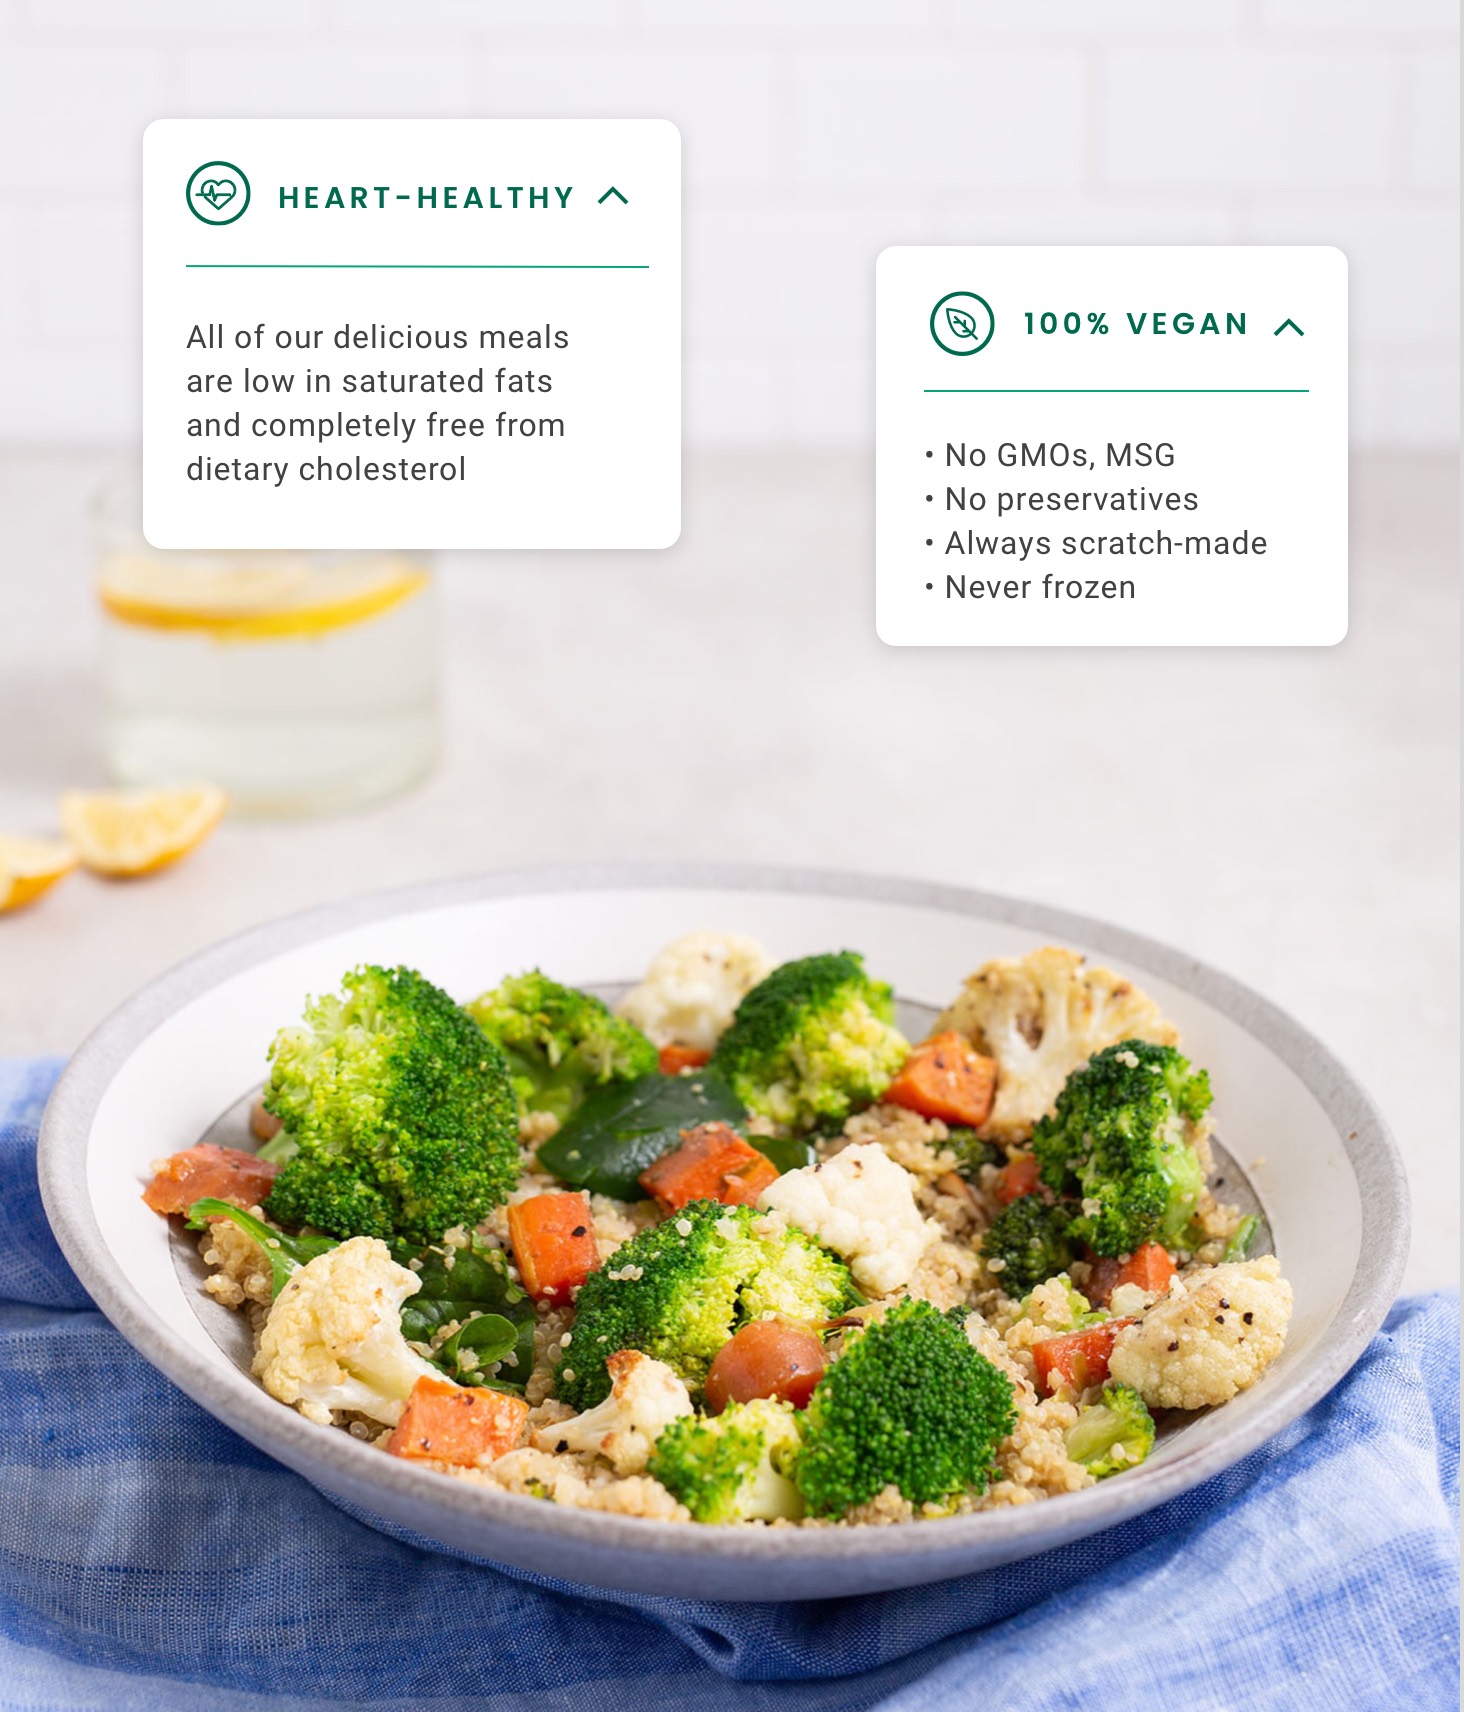 Broccoli dish with veggies